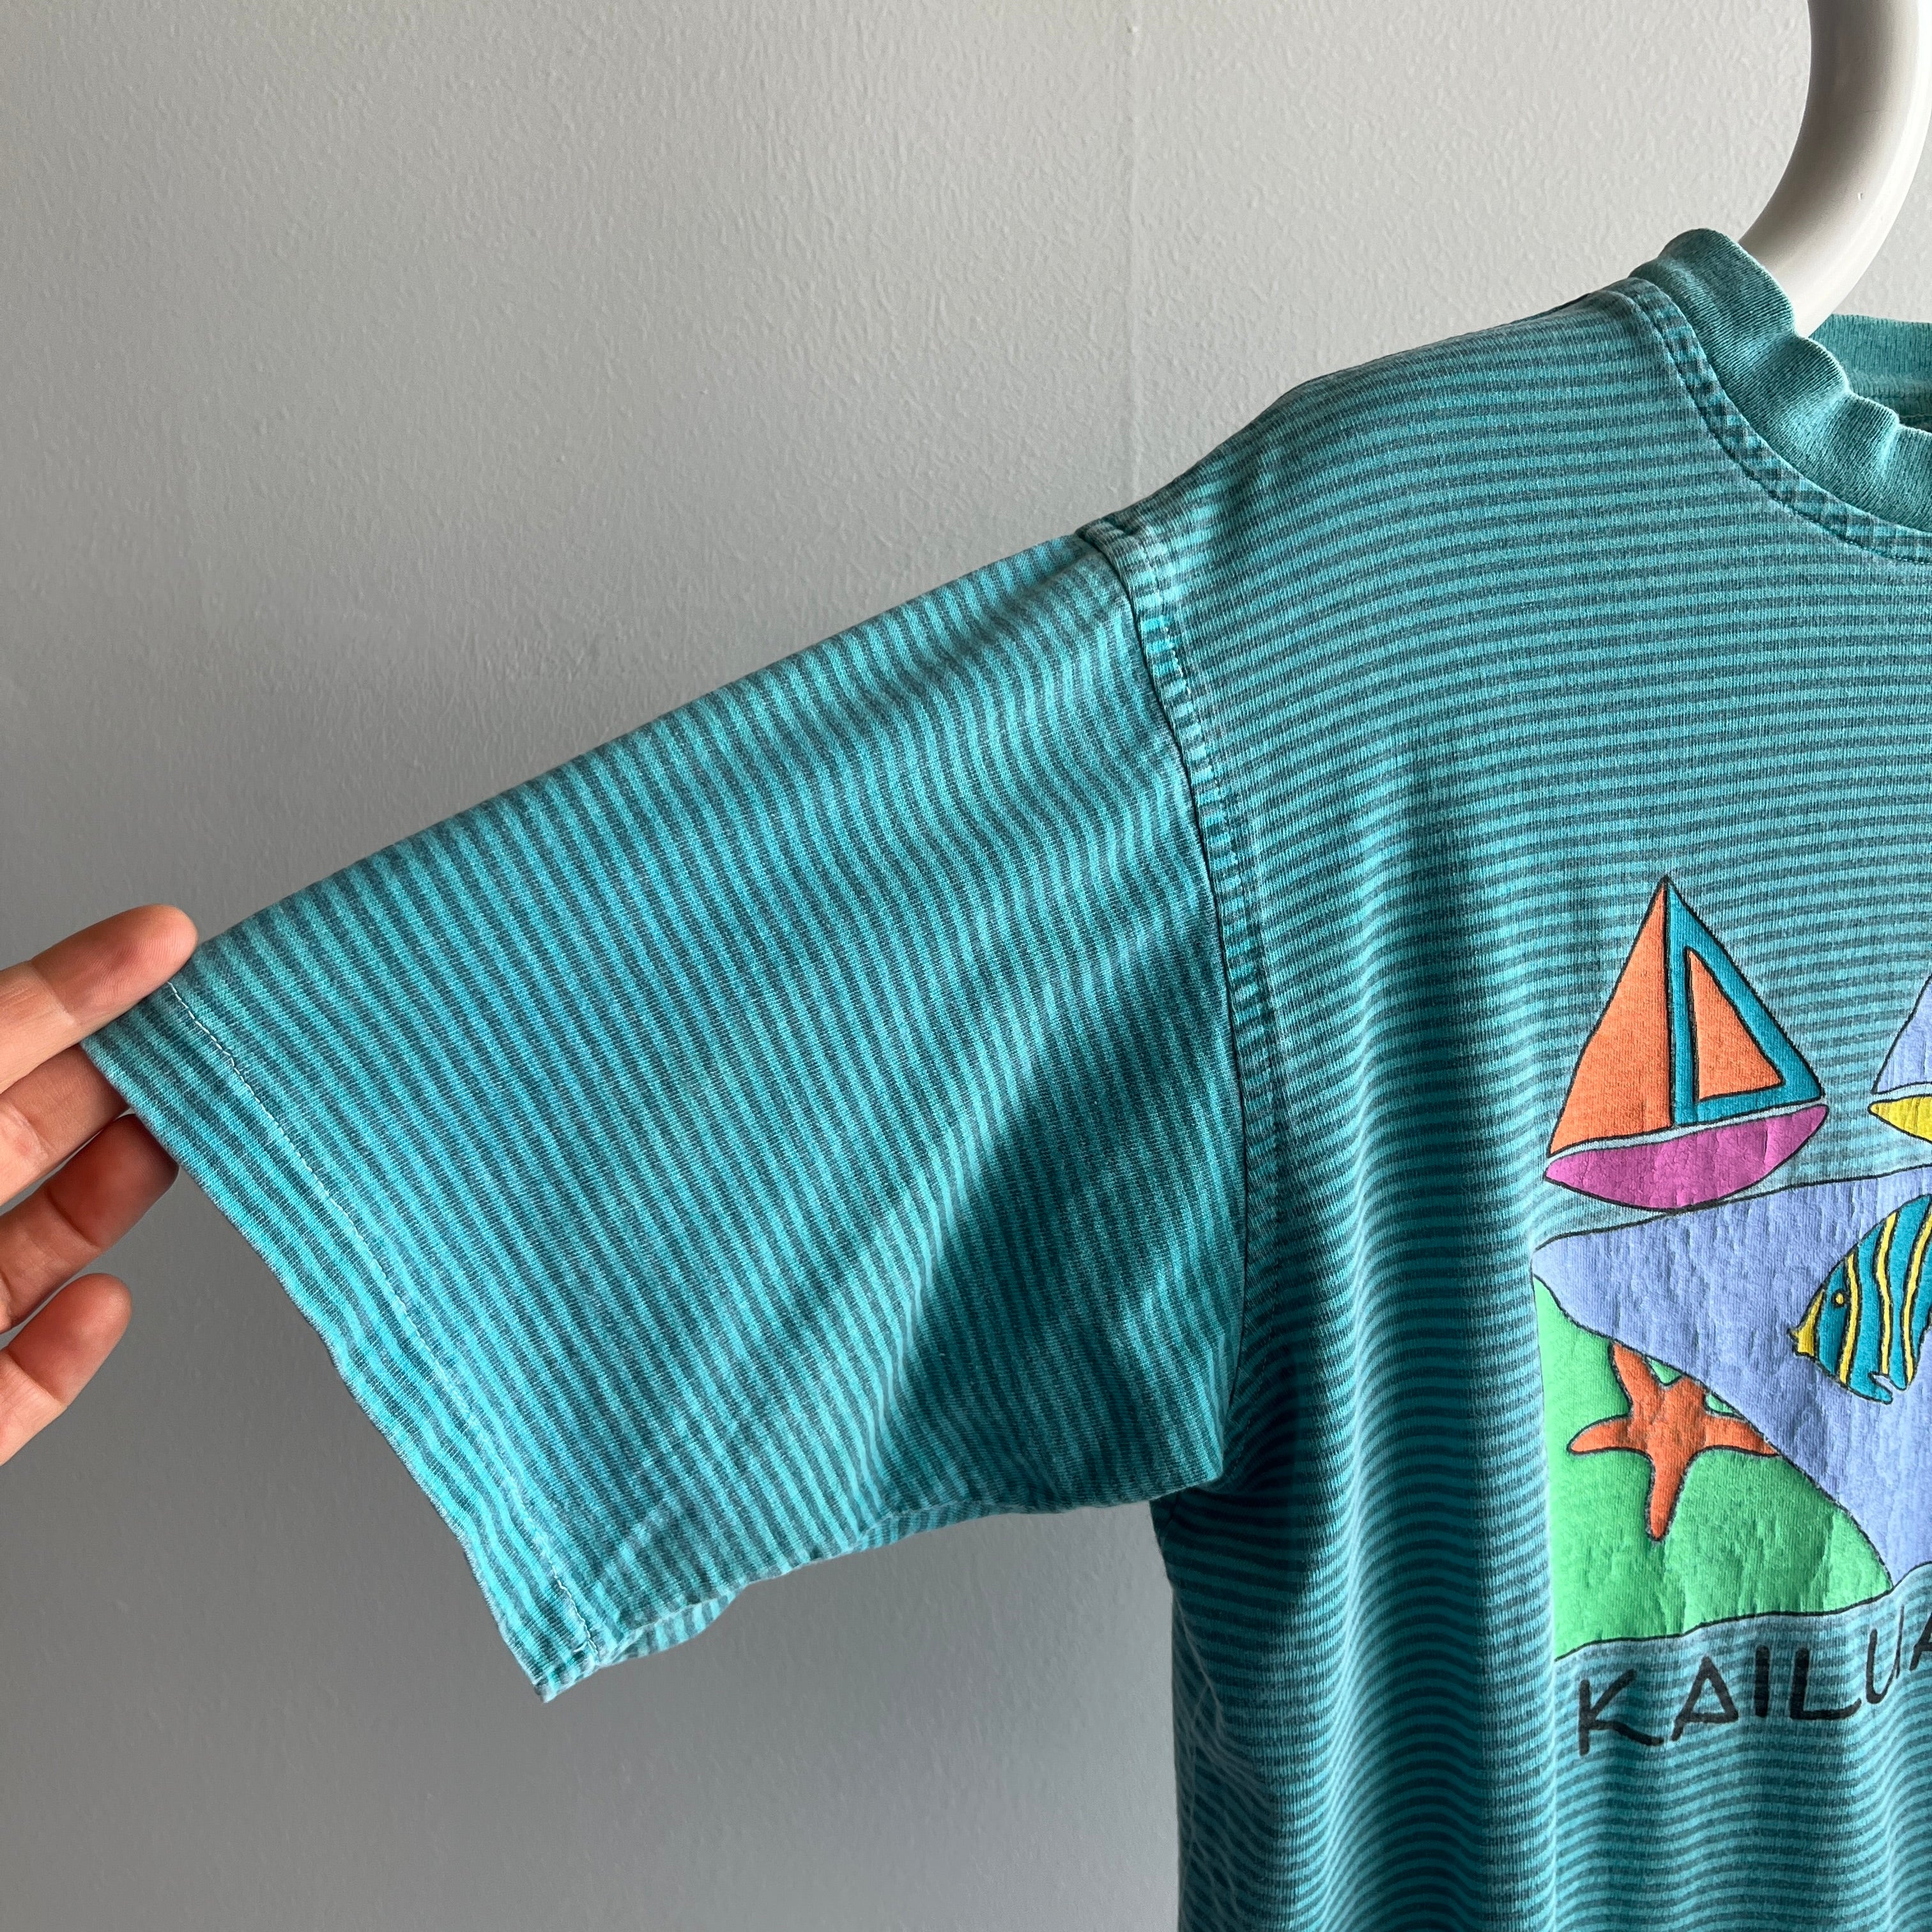 1990s Striped Kailua Kona Tourist T-Shirt